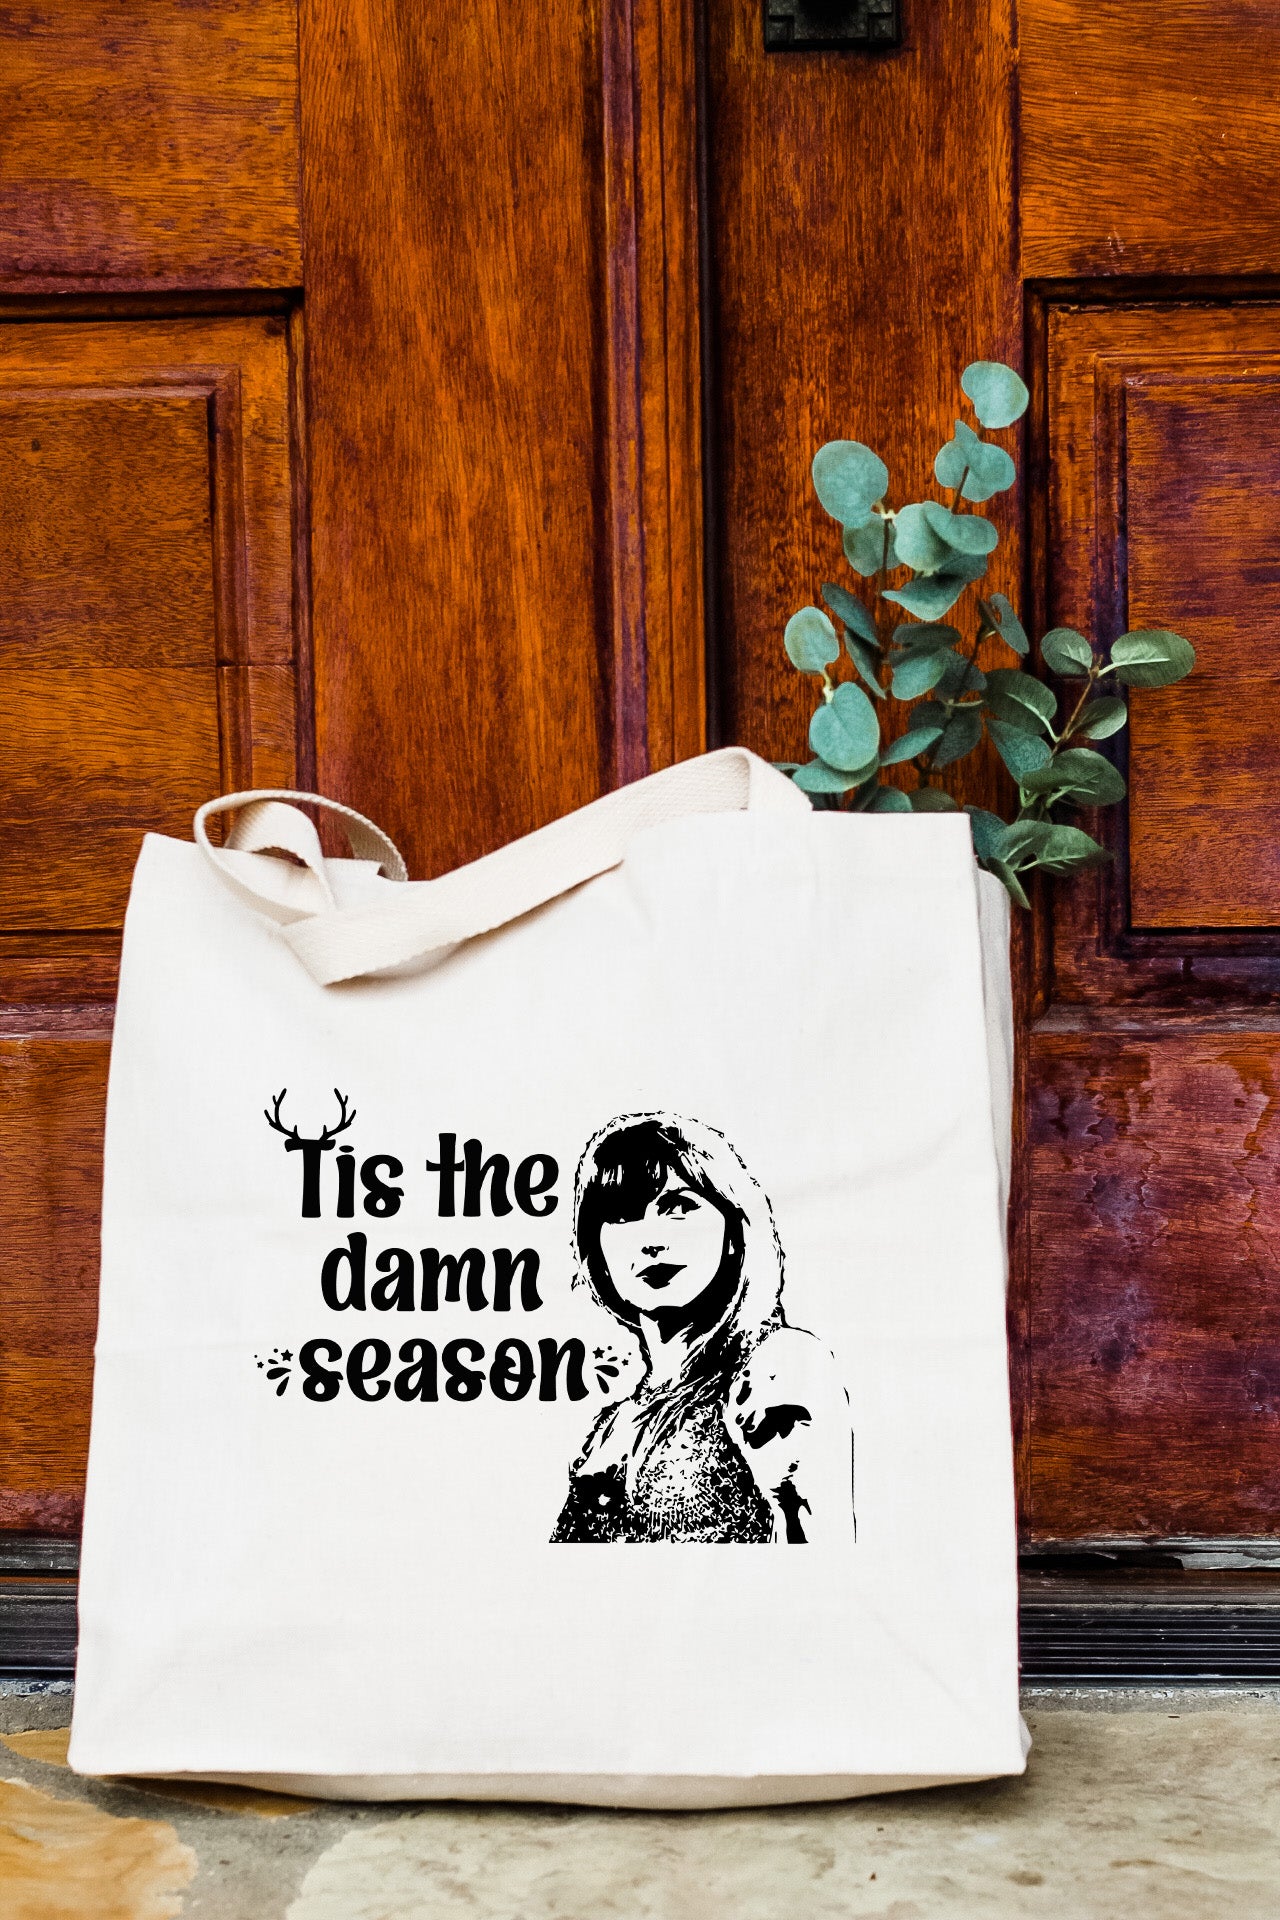 Tis The Damn Season - Tote Bag